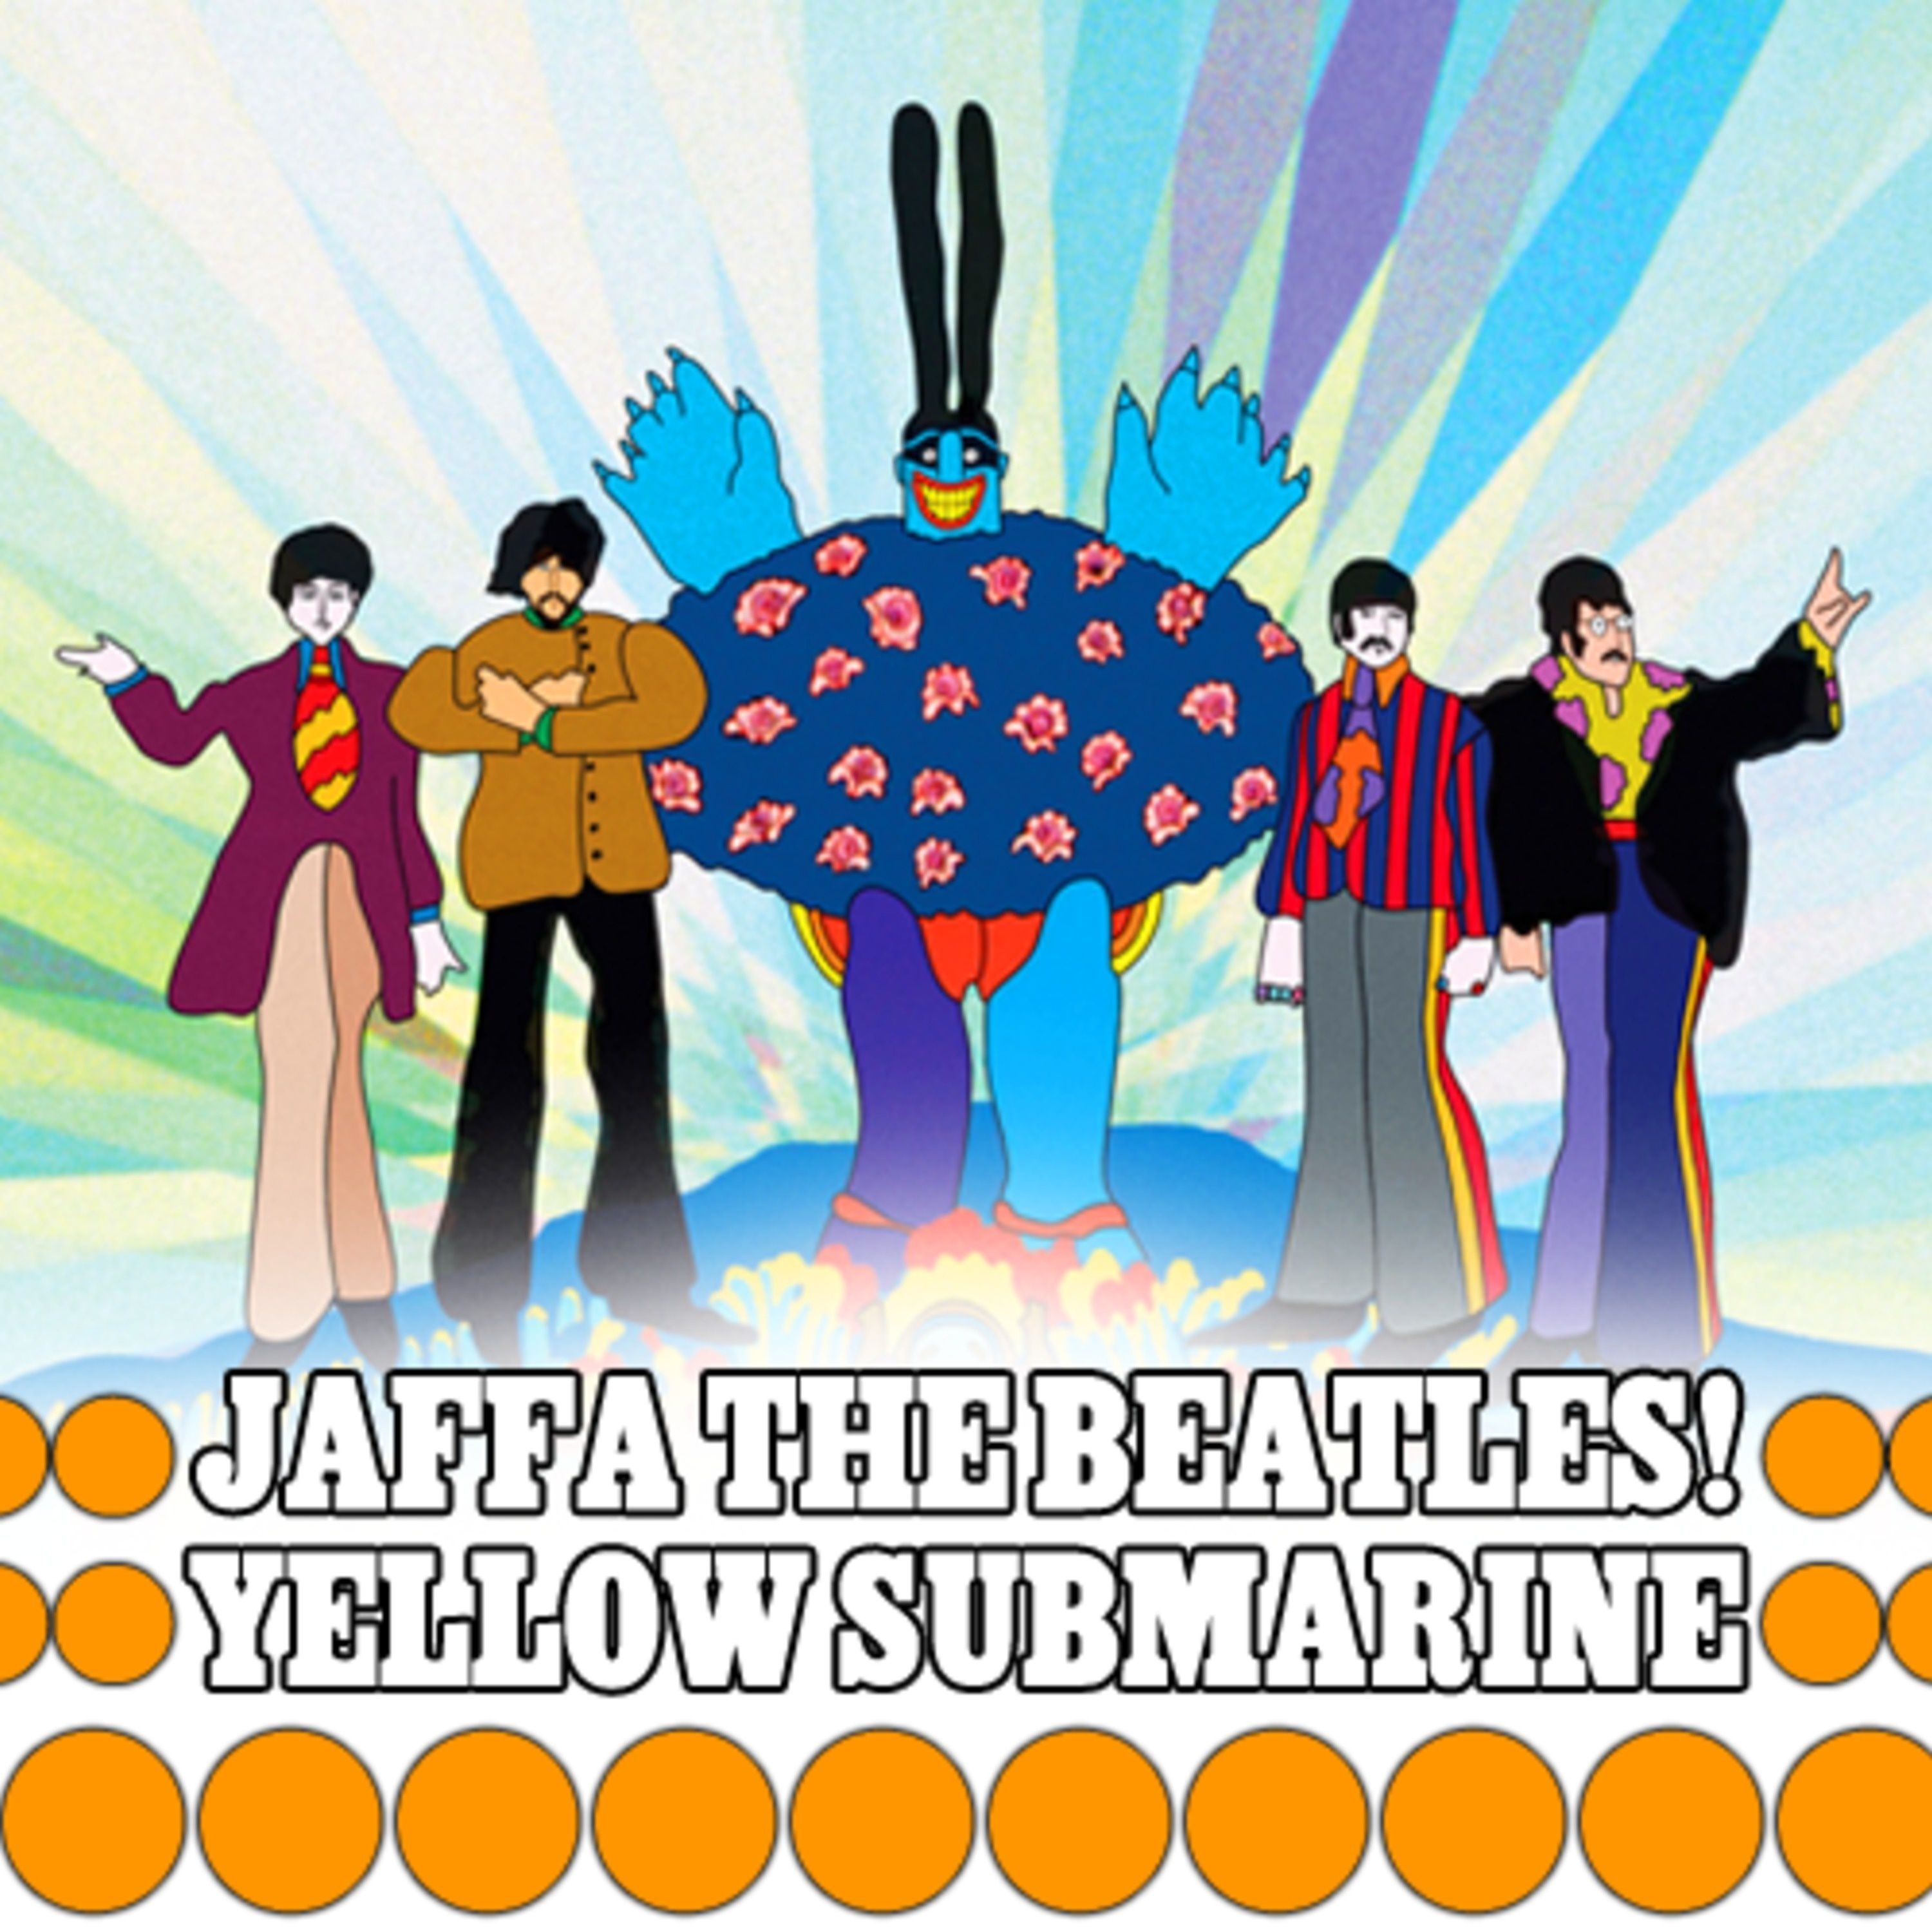 042 - Jaffa The Beatles! Yellow Submarine